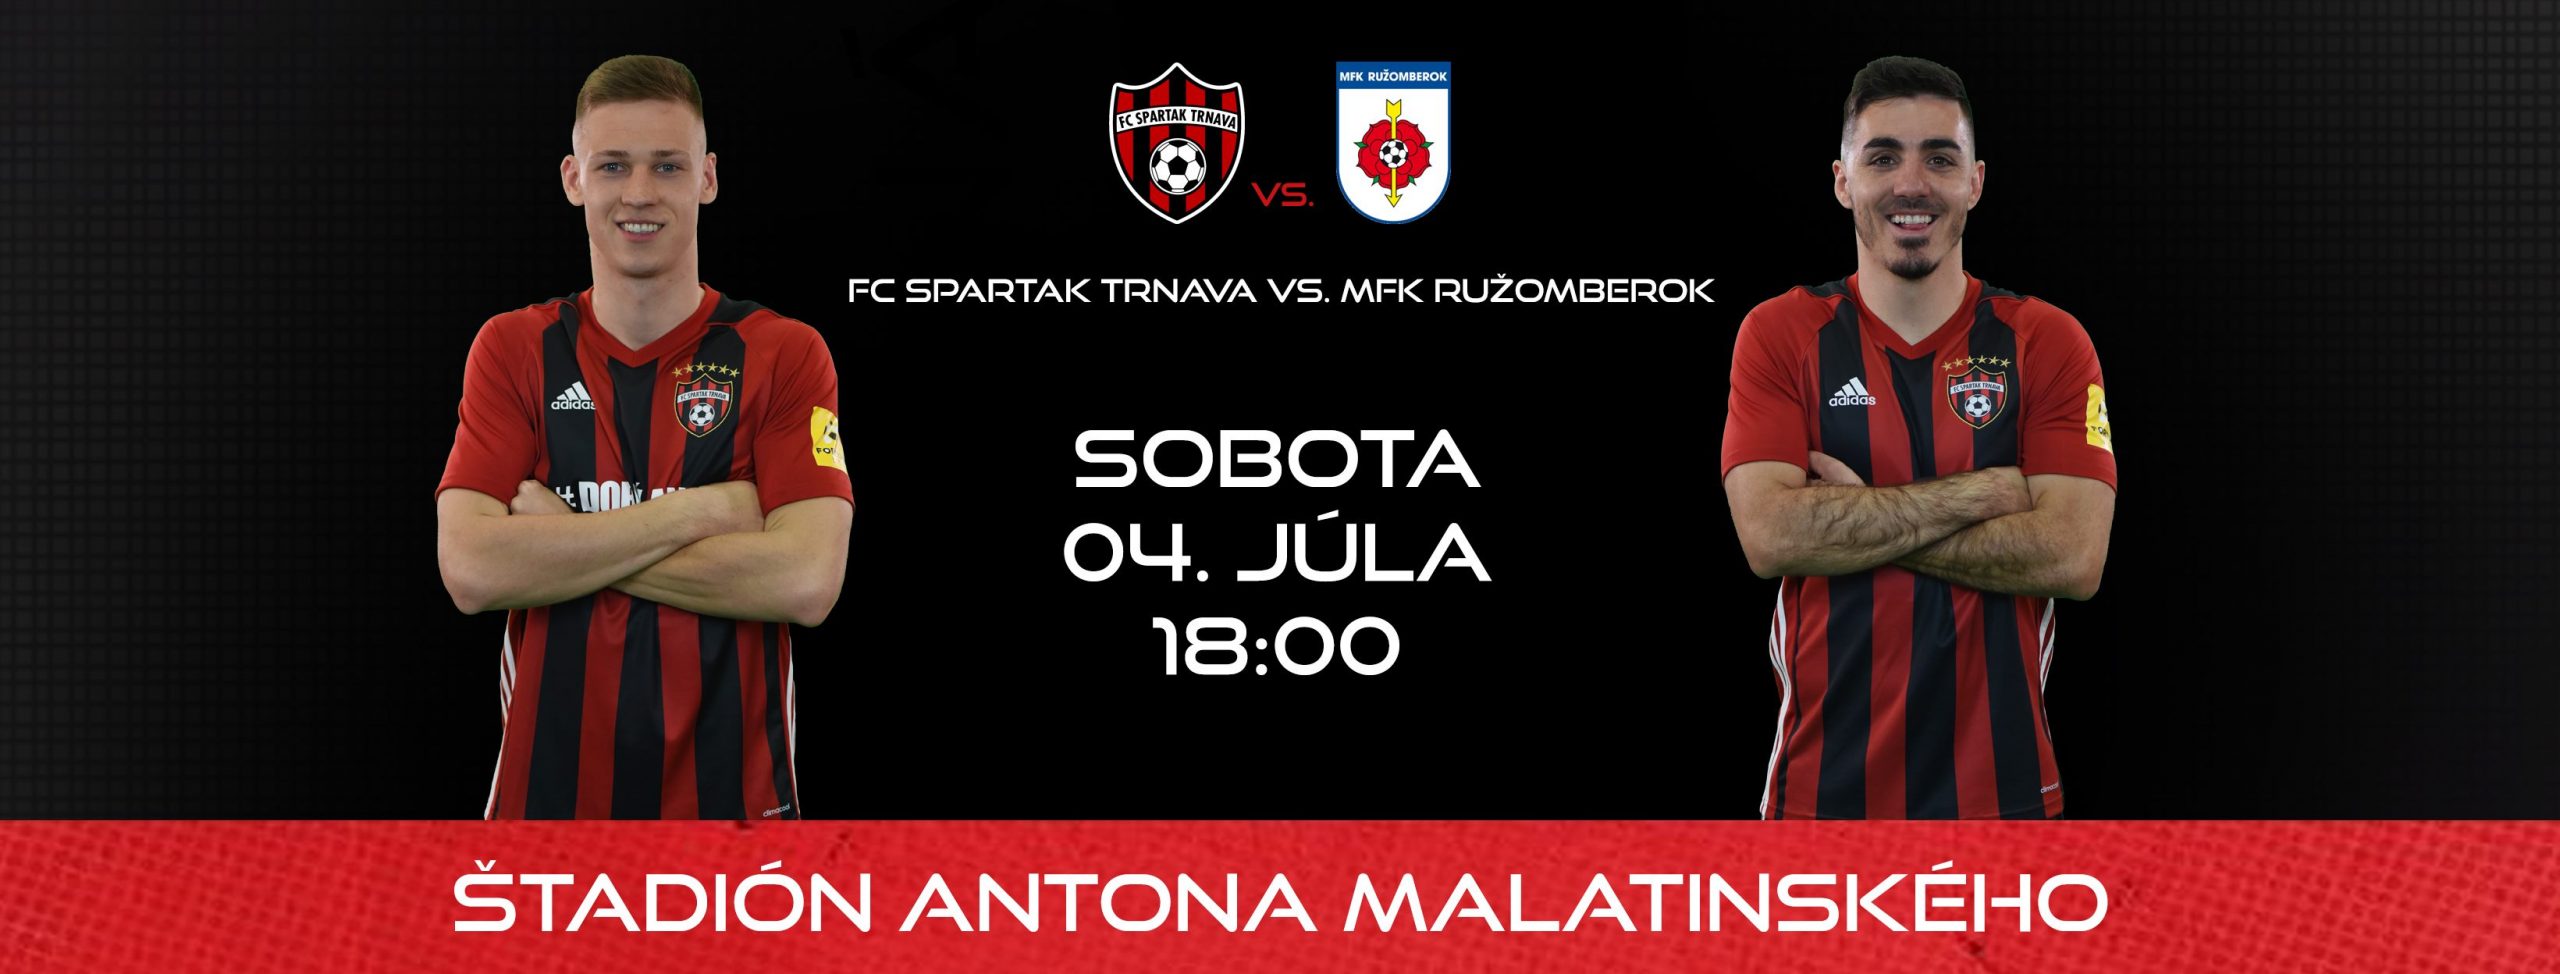 FC Spartak Trnava vs. MFK Ružomberok